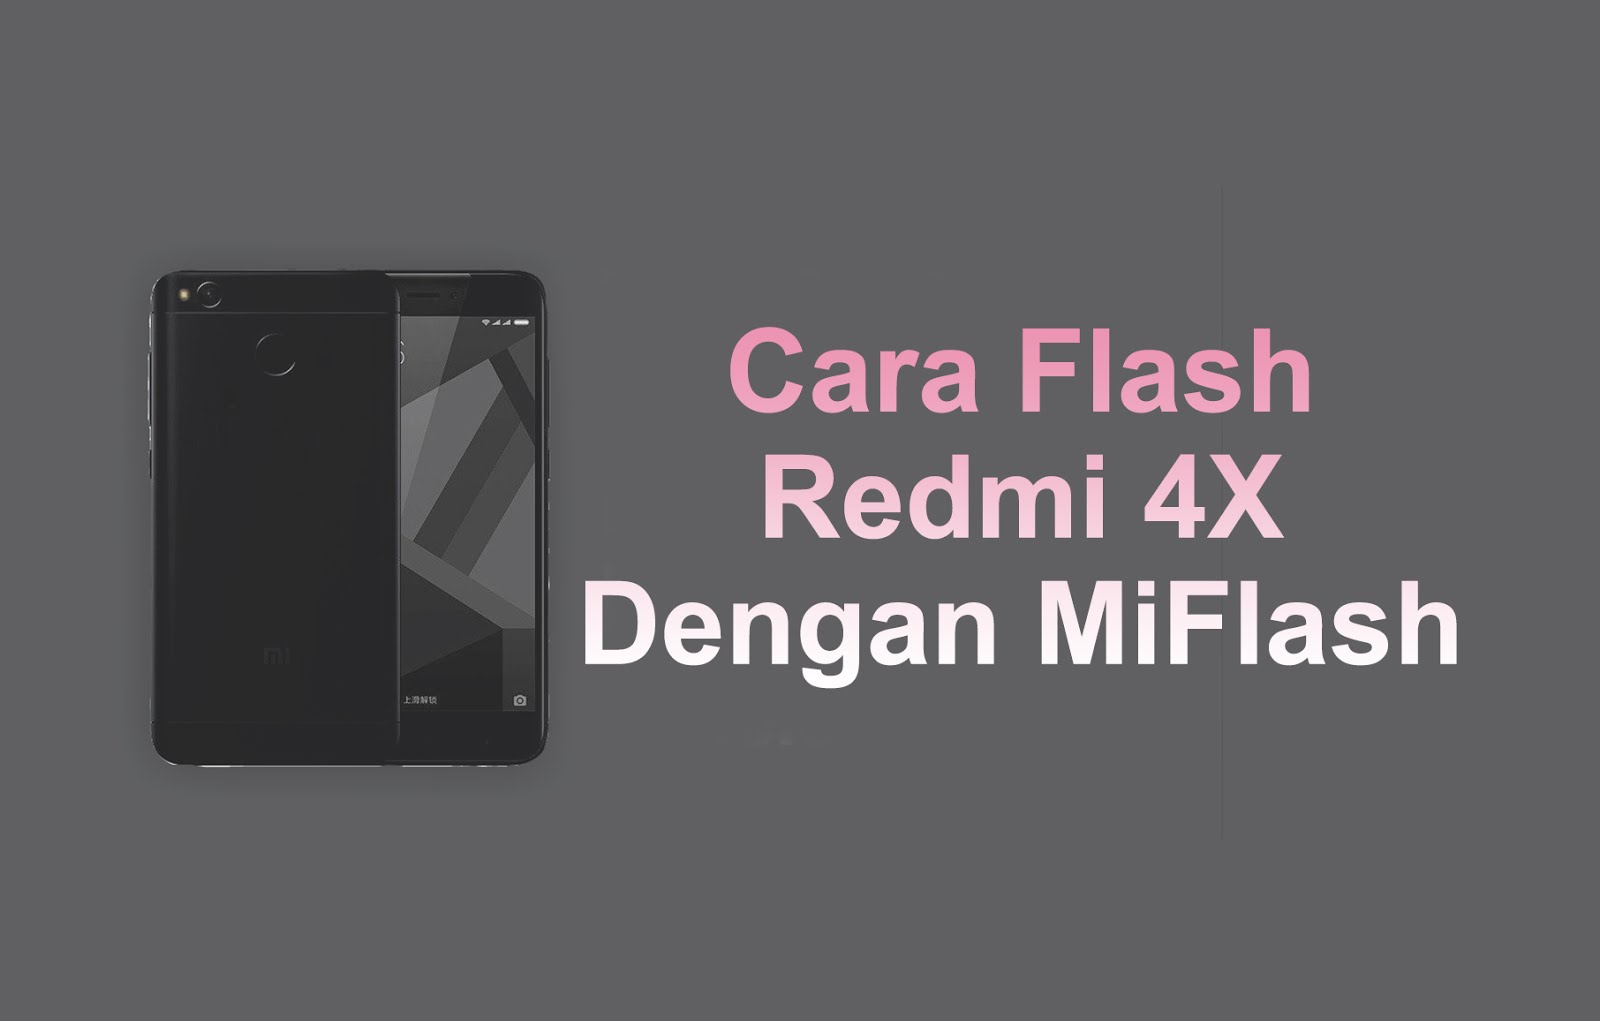 Cara Flash Xiaomi Redmi 4X